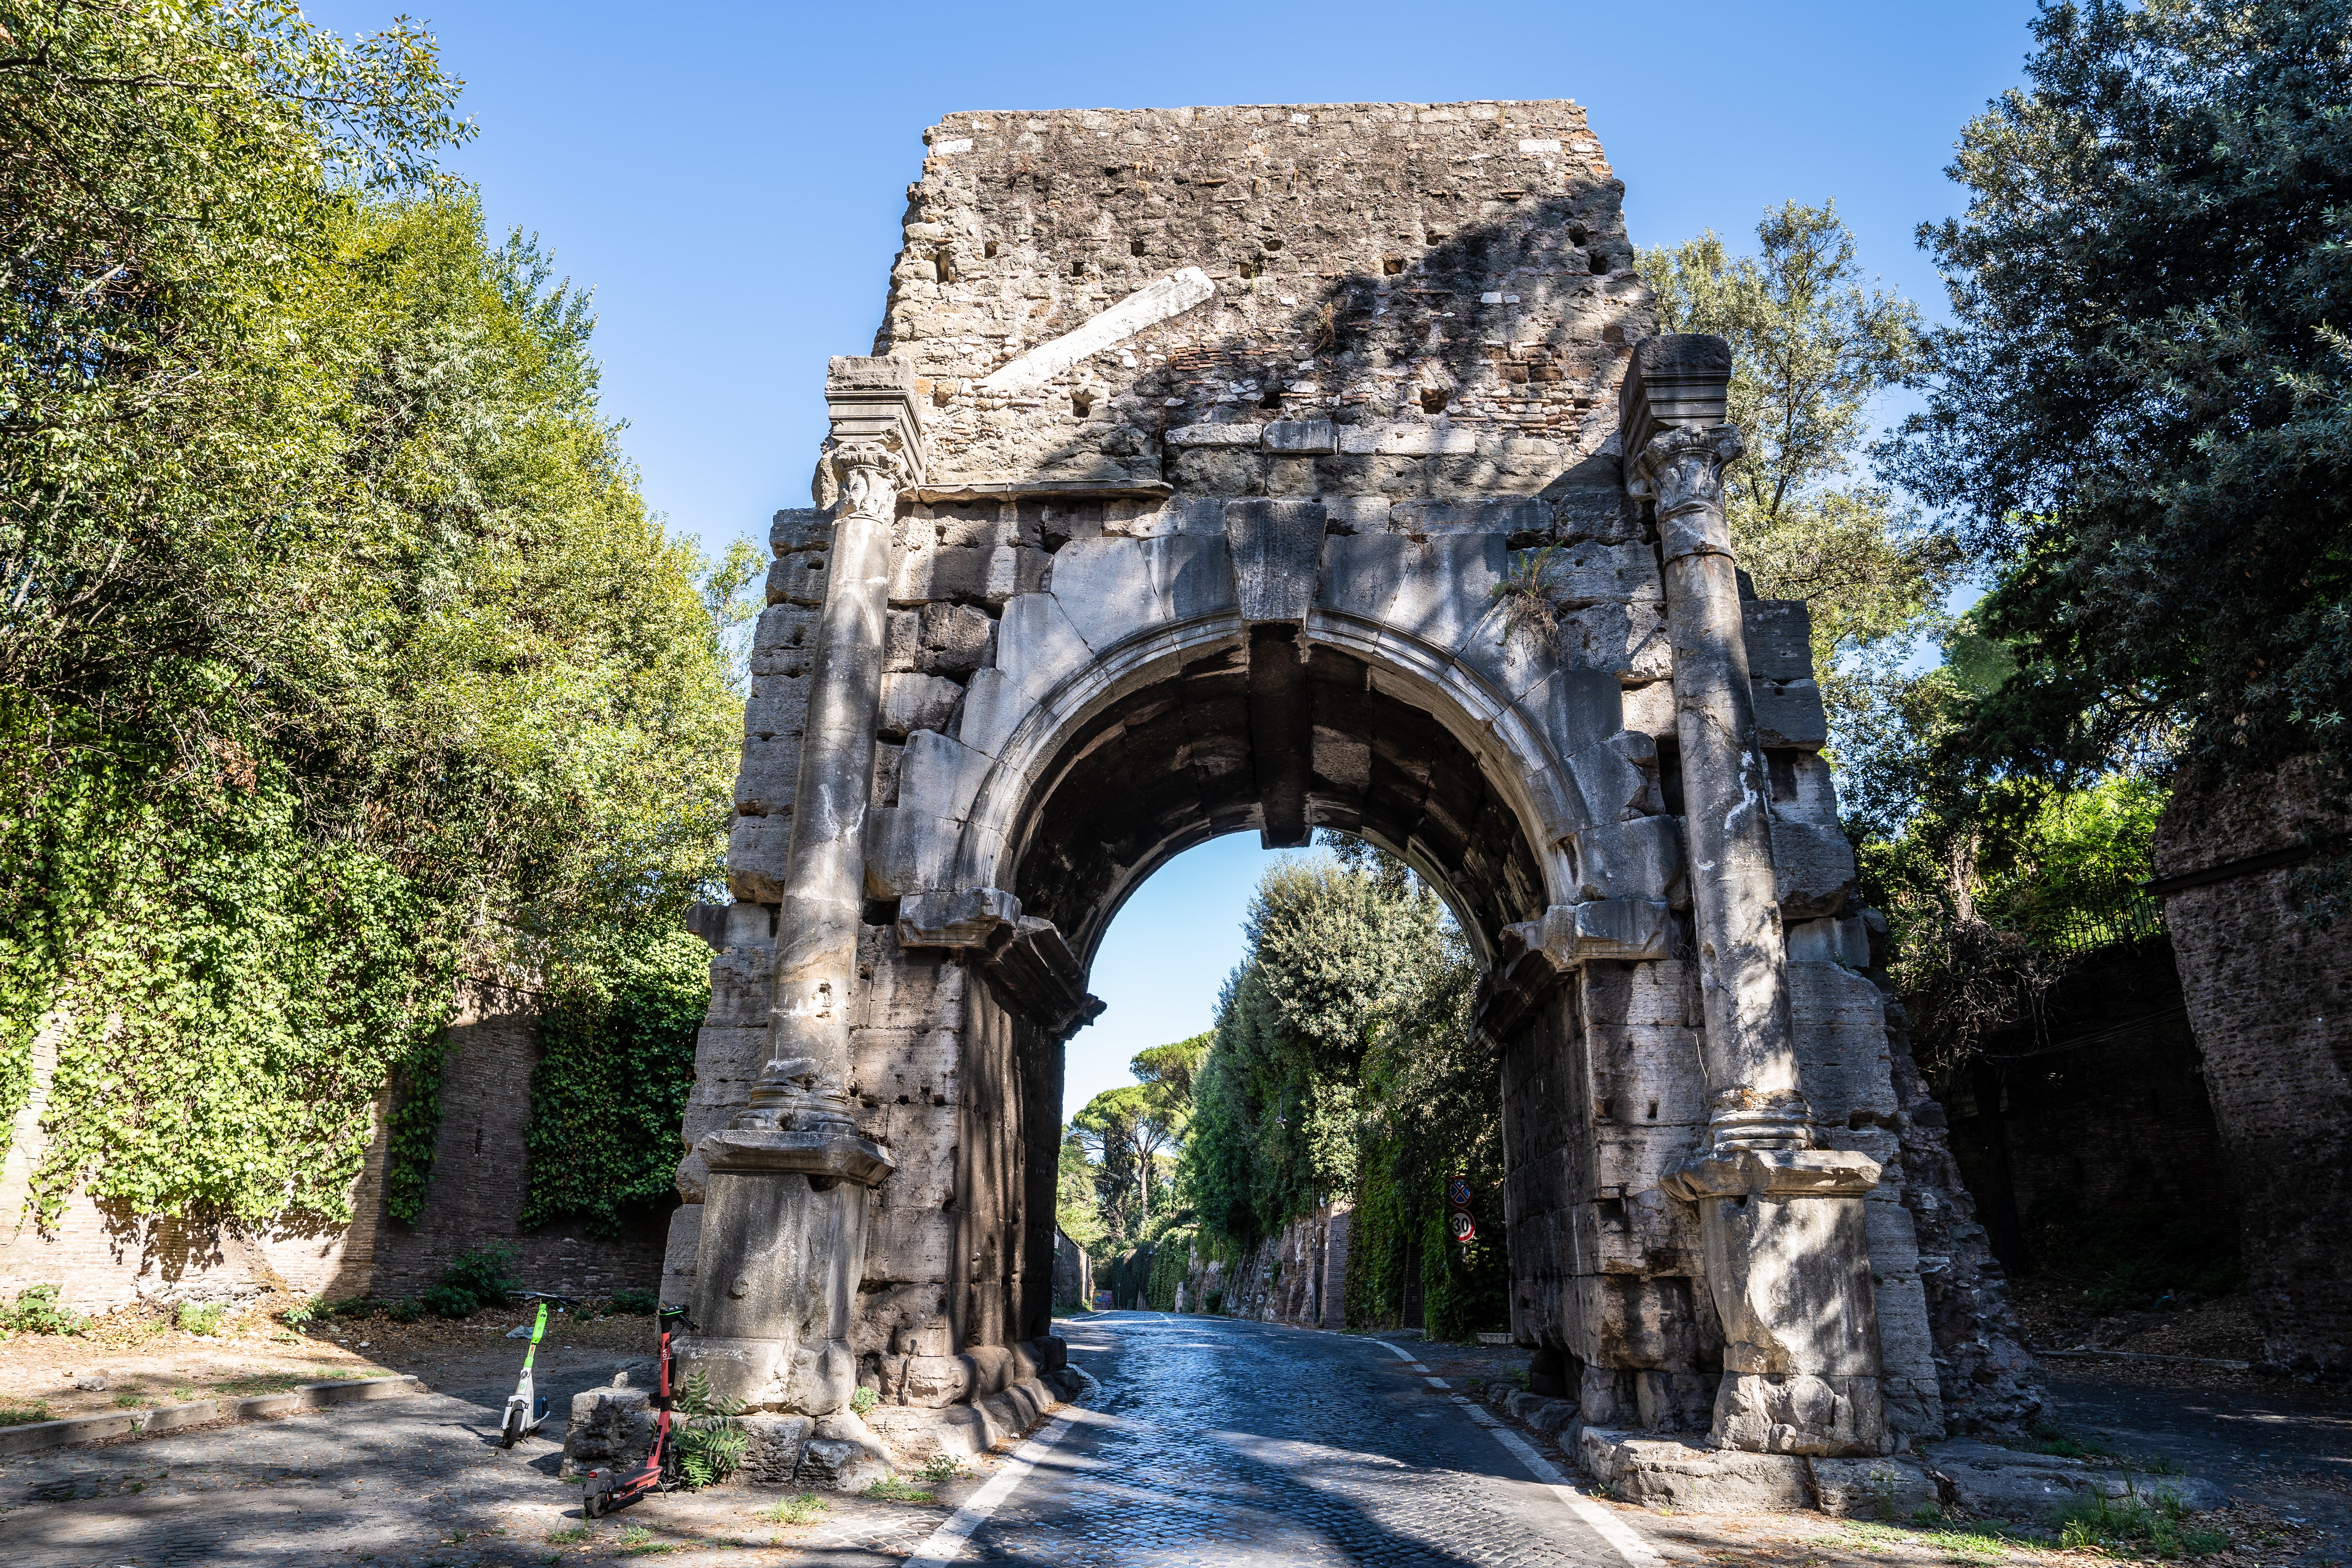 Rome’s Aurelian Walls